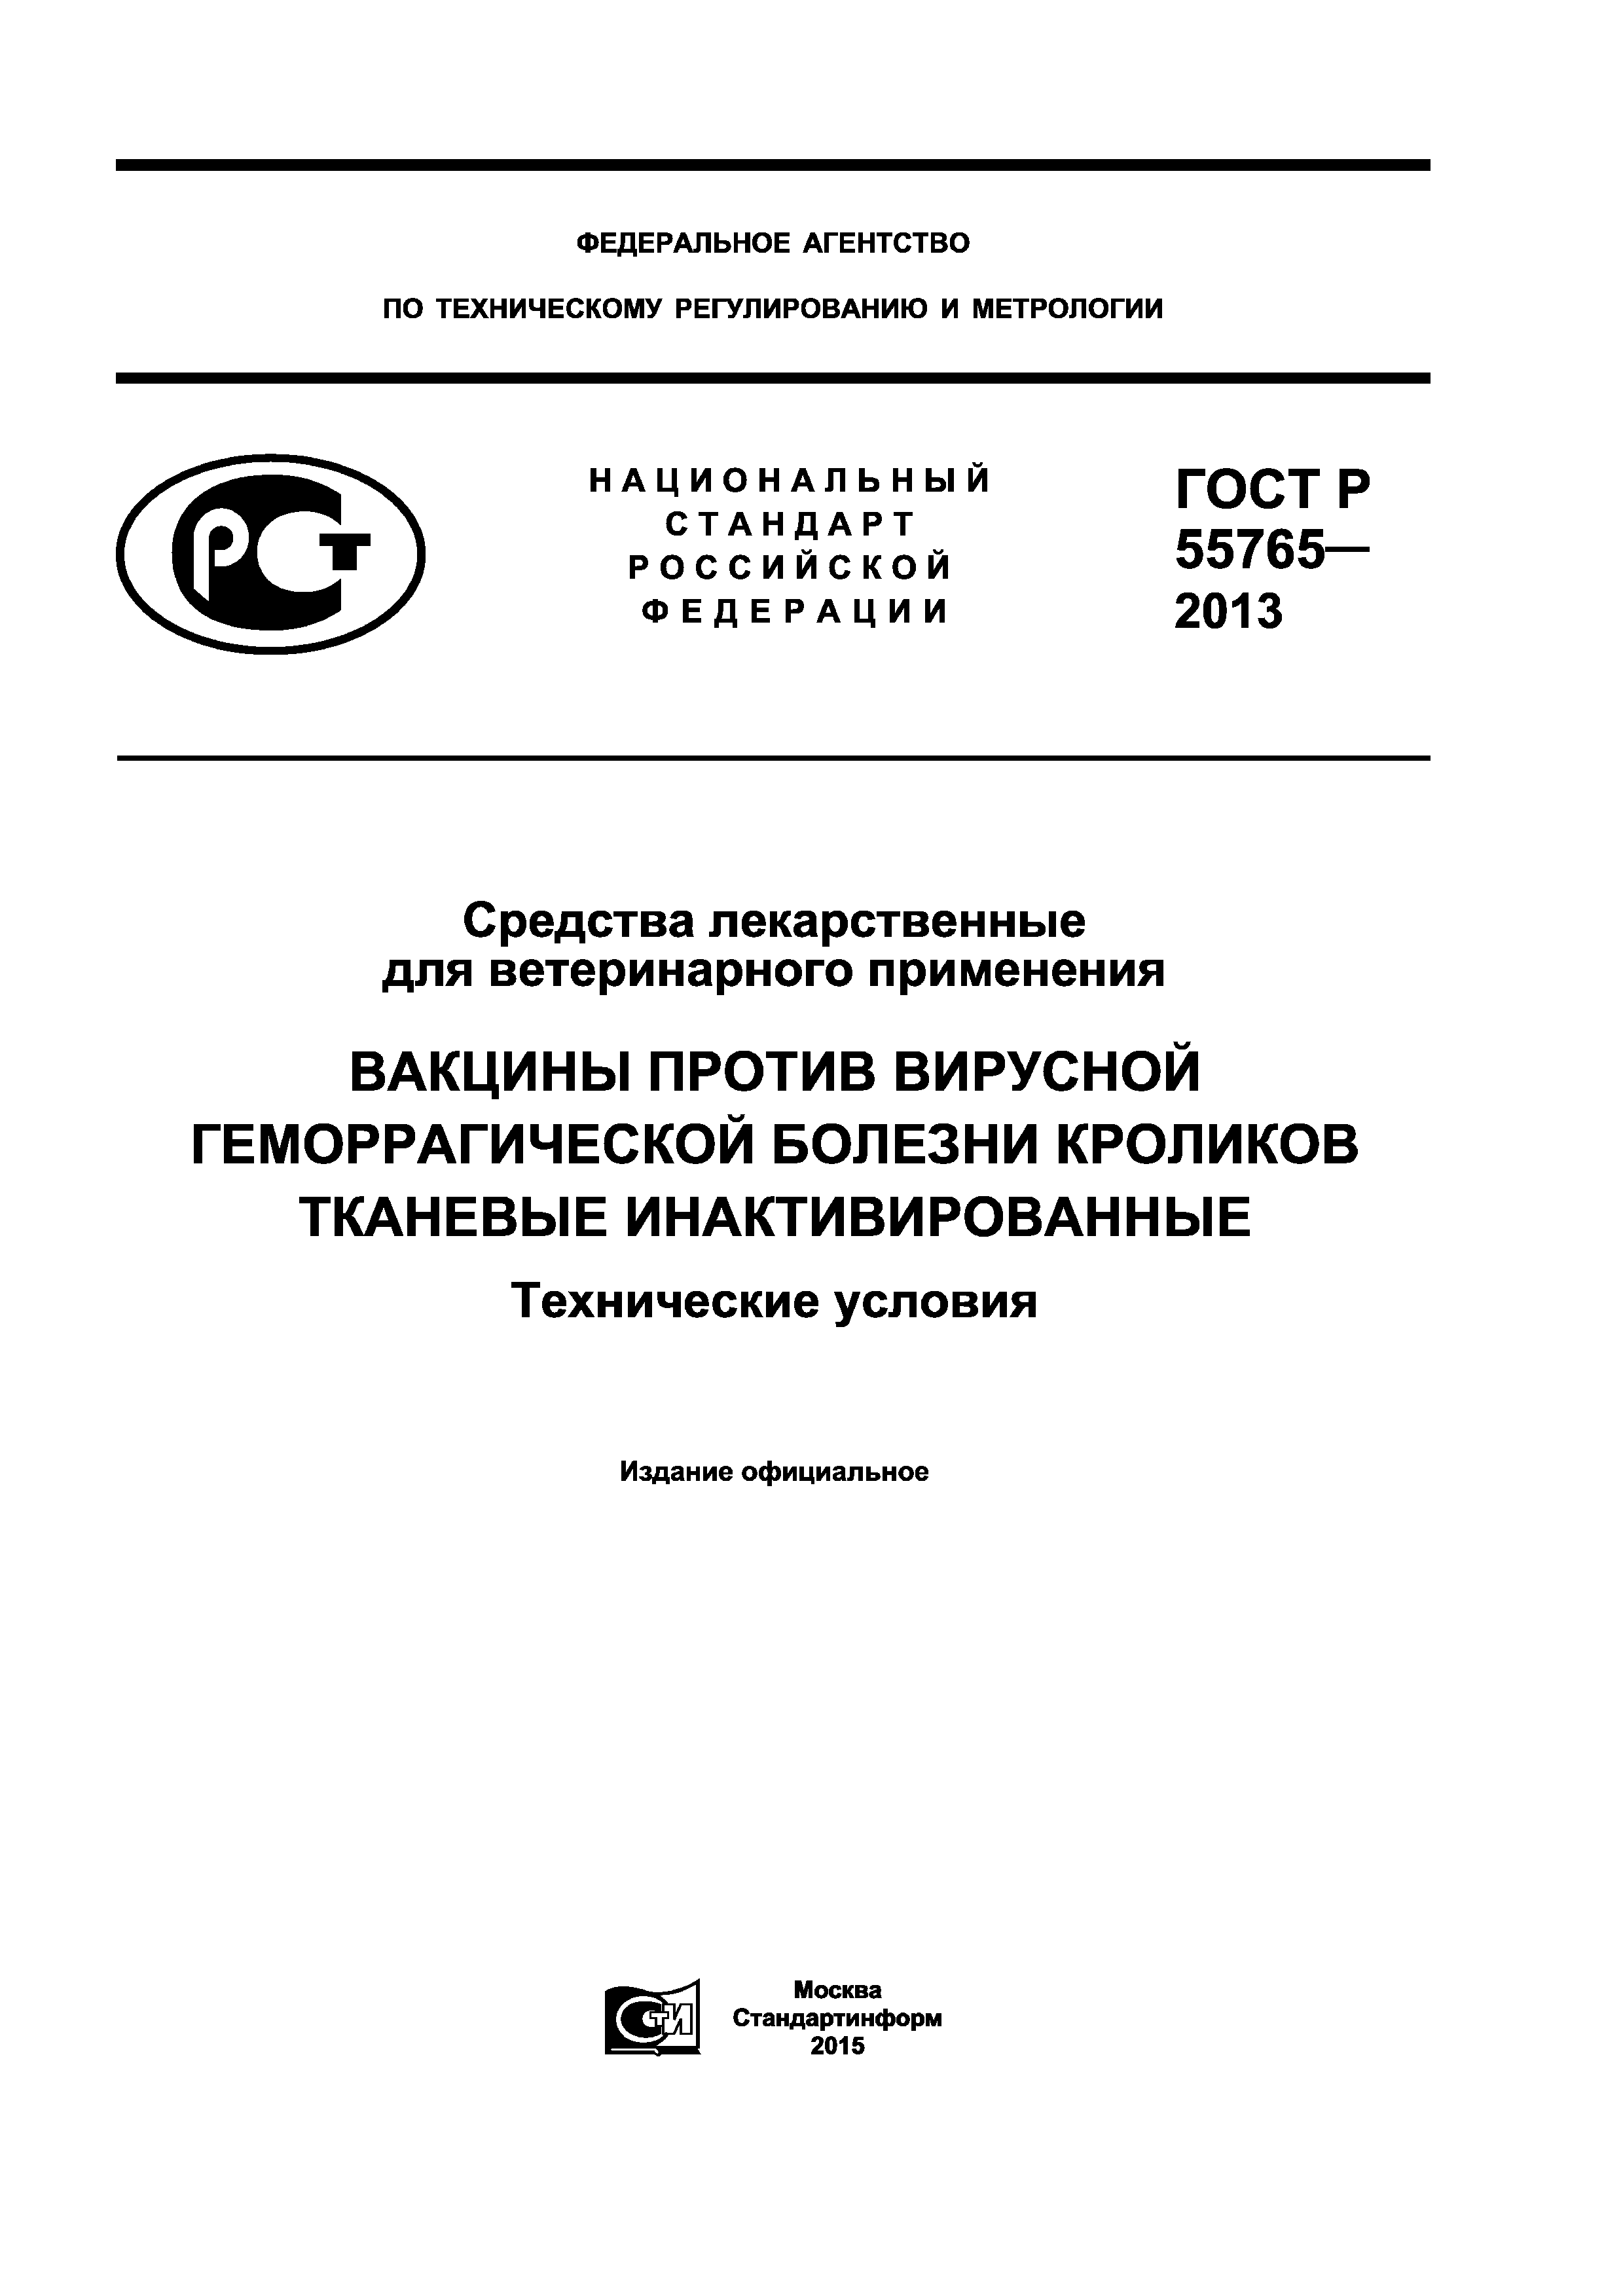 ГОСТ Р 55765-2013